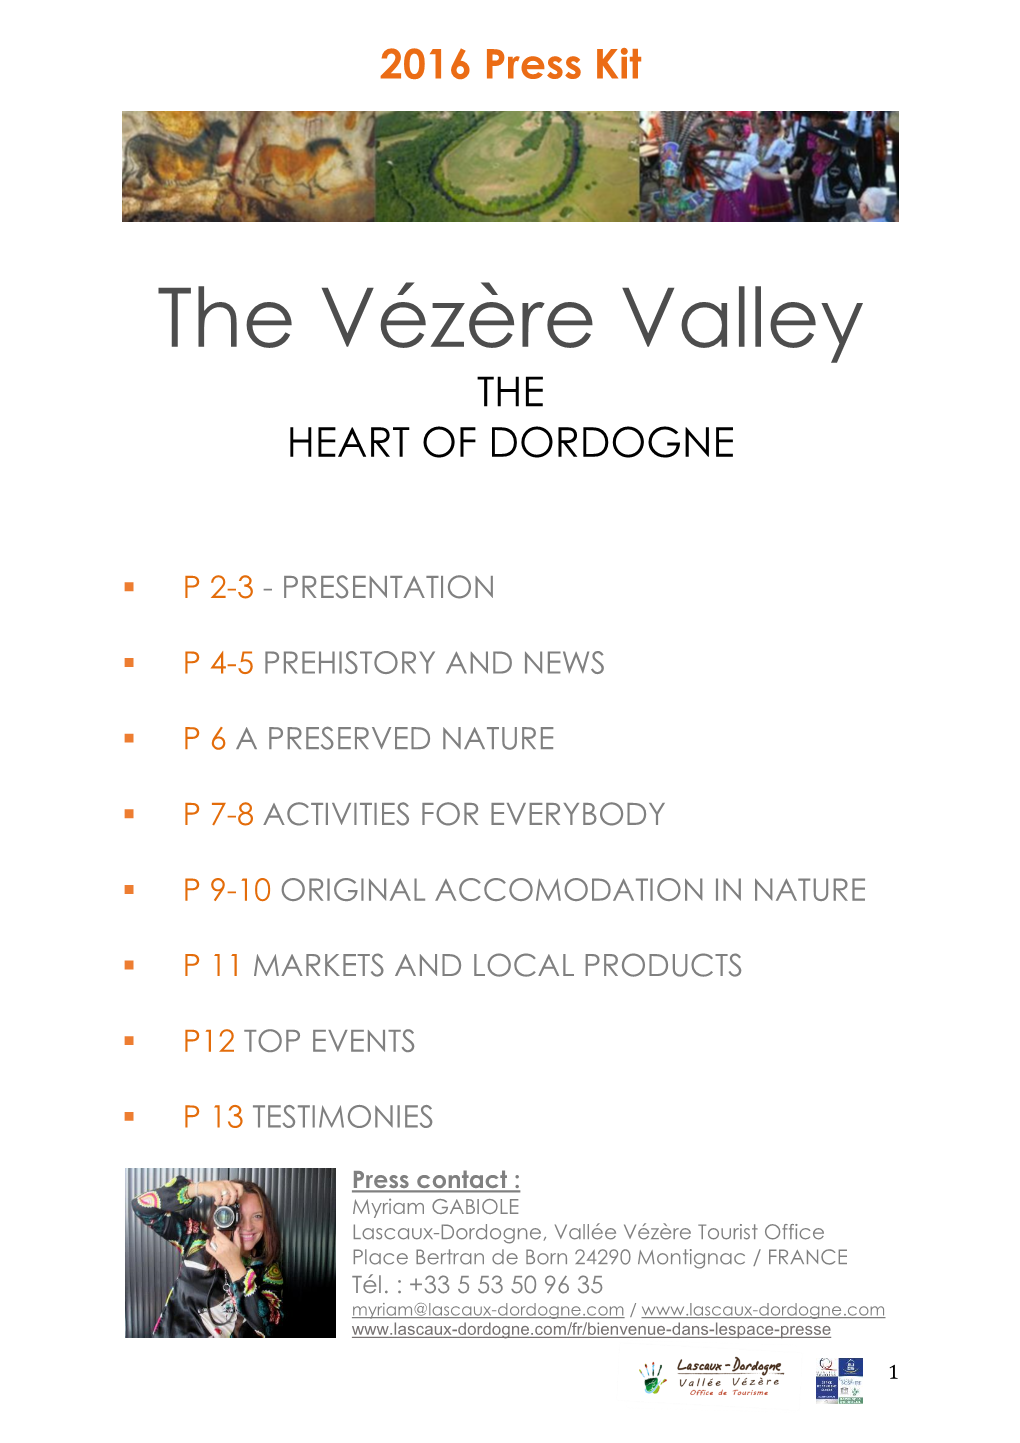 The Vézère Valley the HEART of DORDOGNE